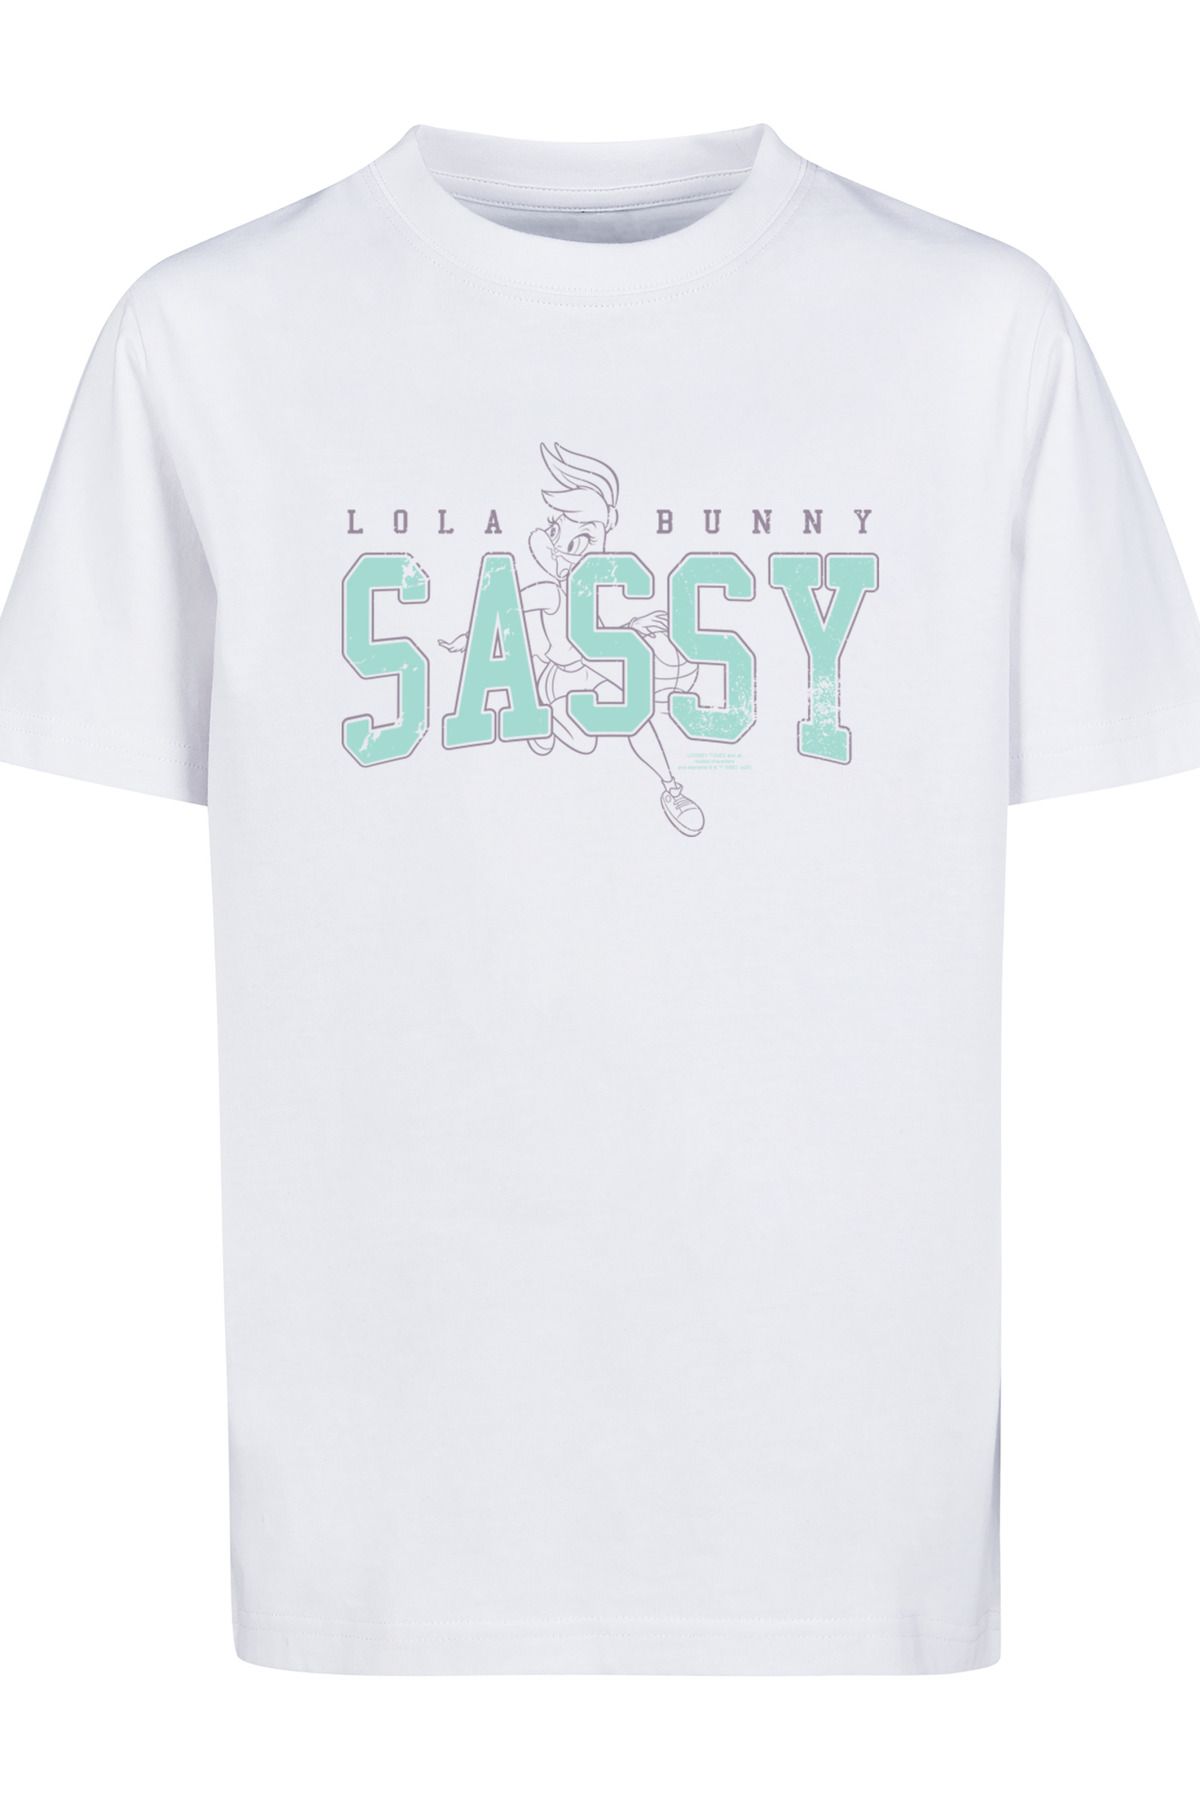 F4NT4STIC Kinder Tunes Sassy-WHT - Kids Bunny T-Shirt Lola Trendyol mit Looney Basic